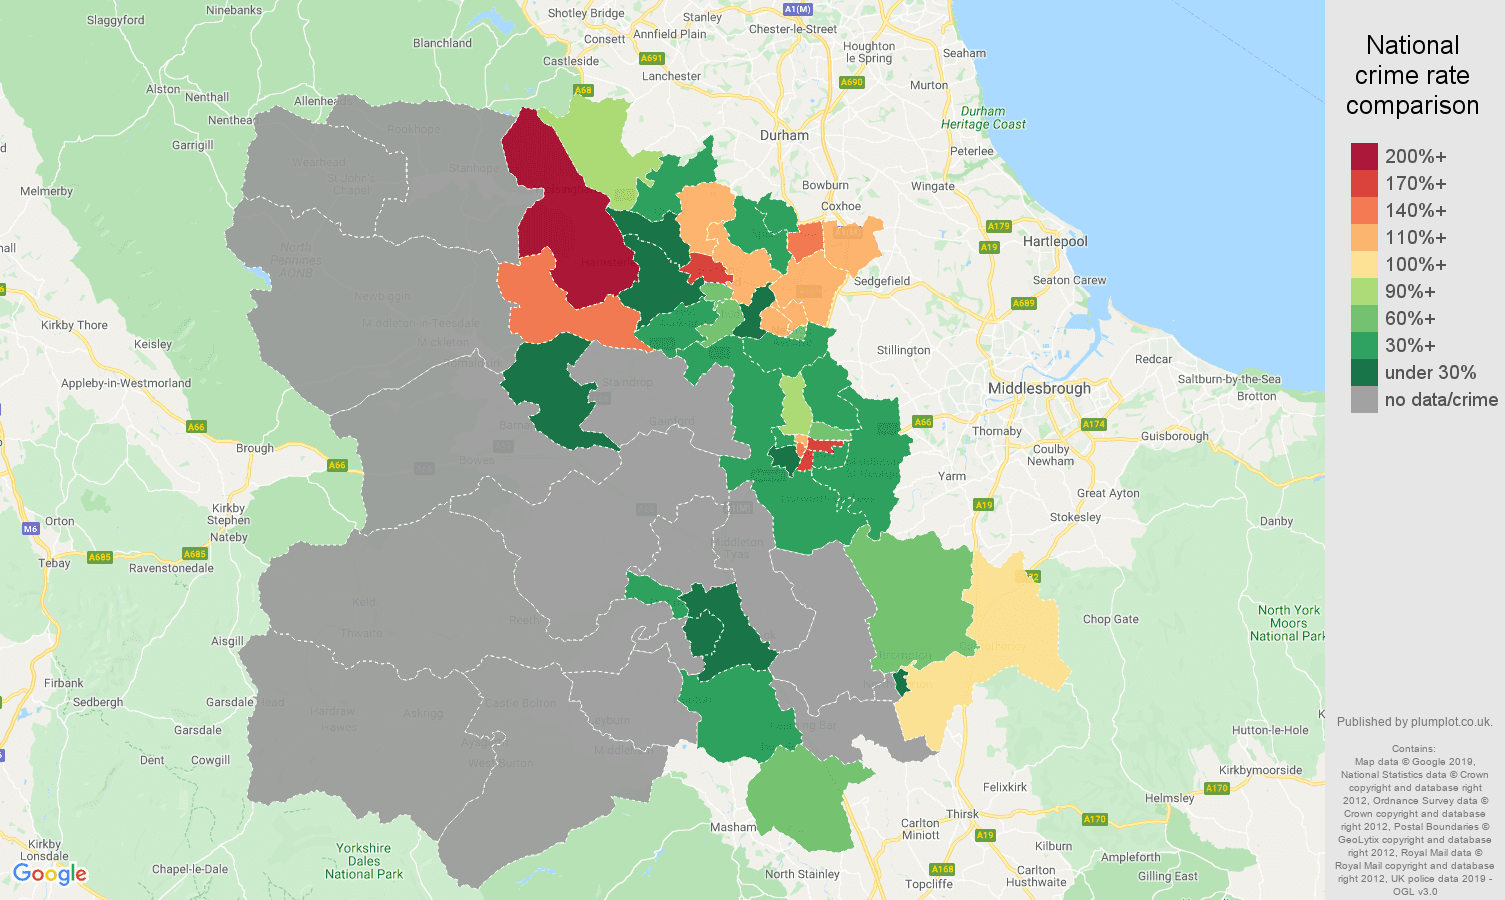 Darlington possession of weapons crime rate comparison map